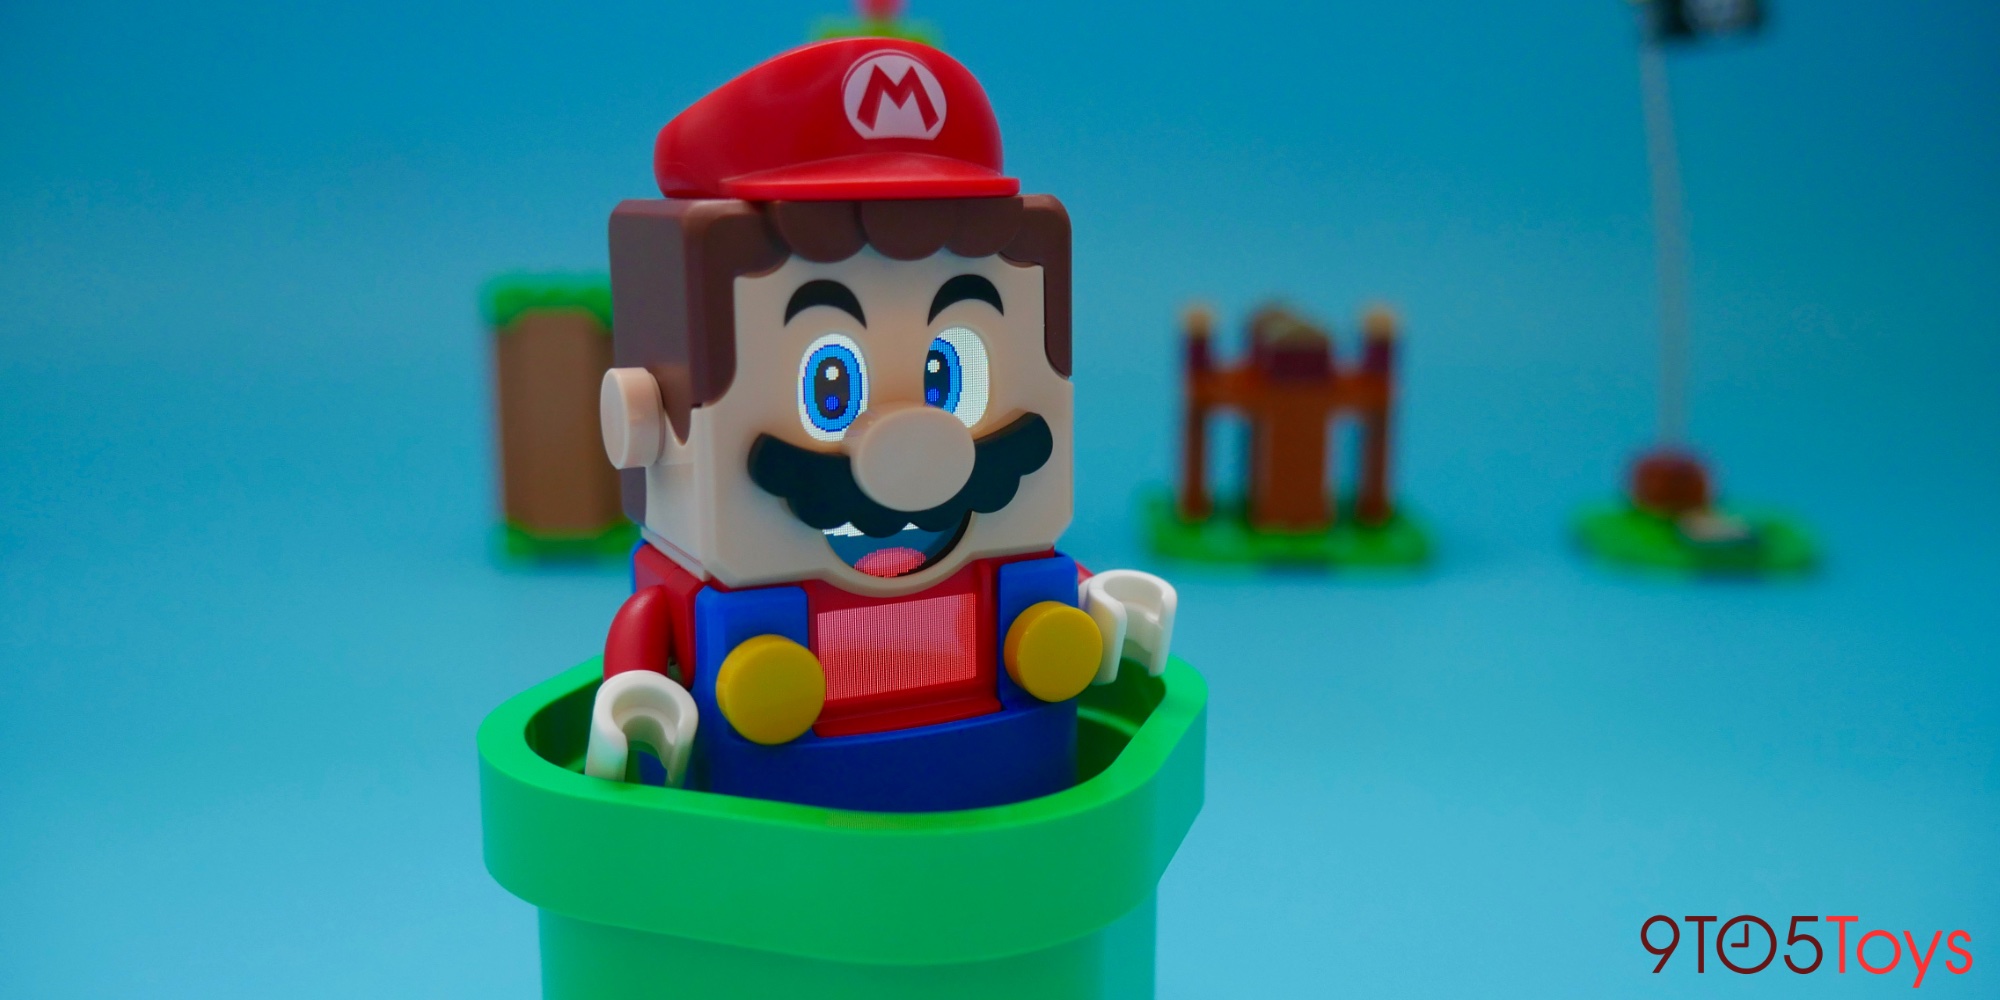 Super Mario 5 Figure Mario Odyssey Theme